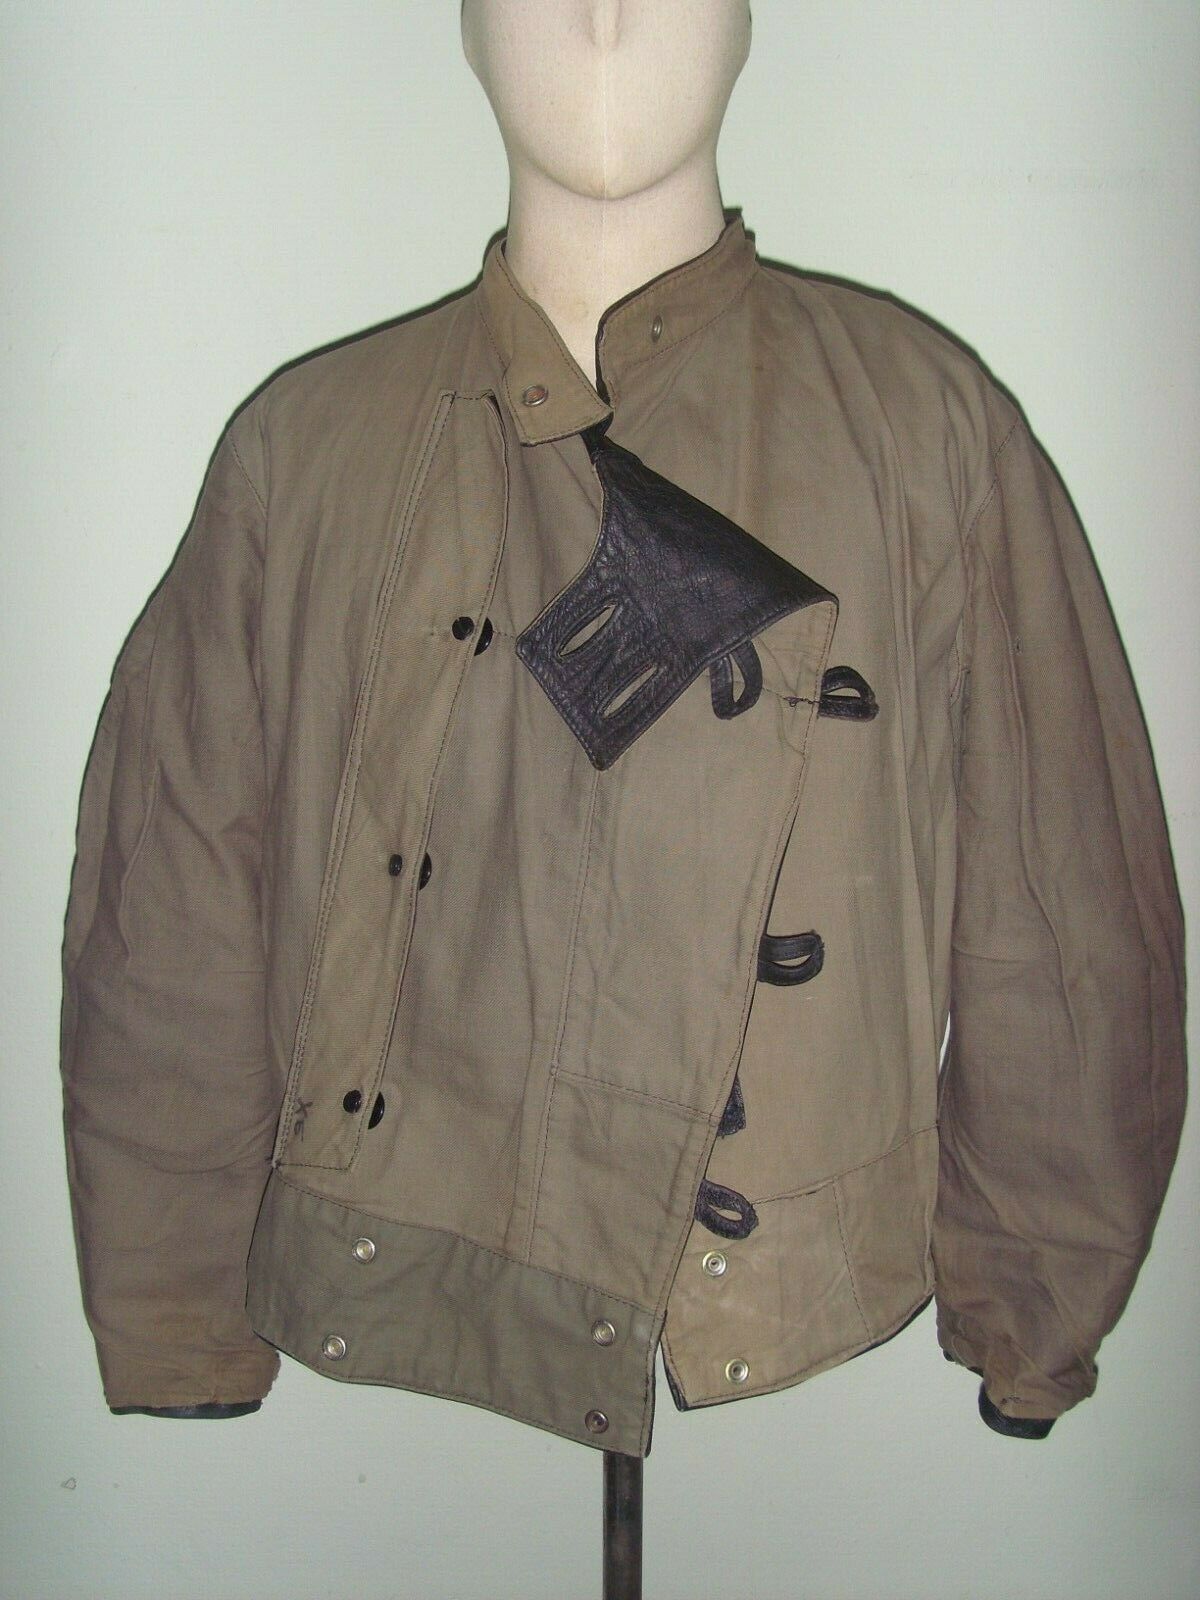 SWEDISH DISPATCH RIDER'S JACKET | Vintage Leather Jackets Forum